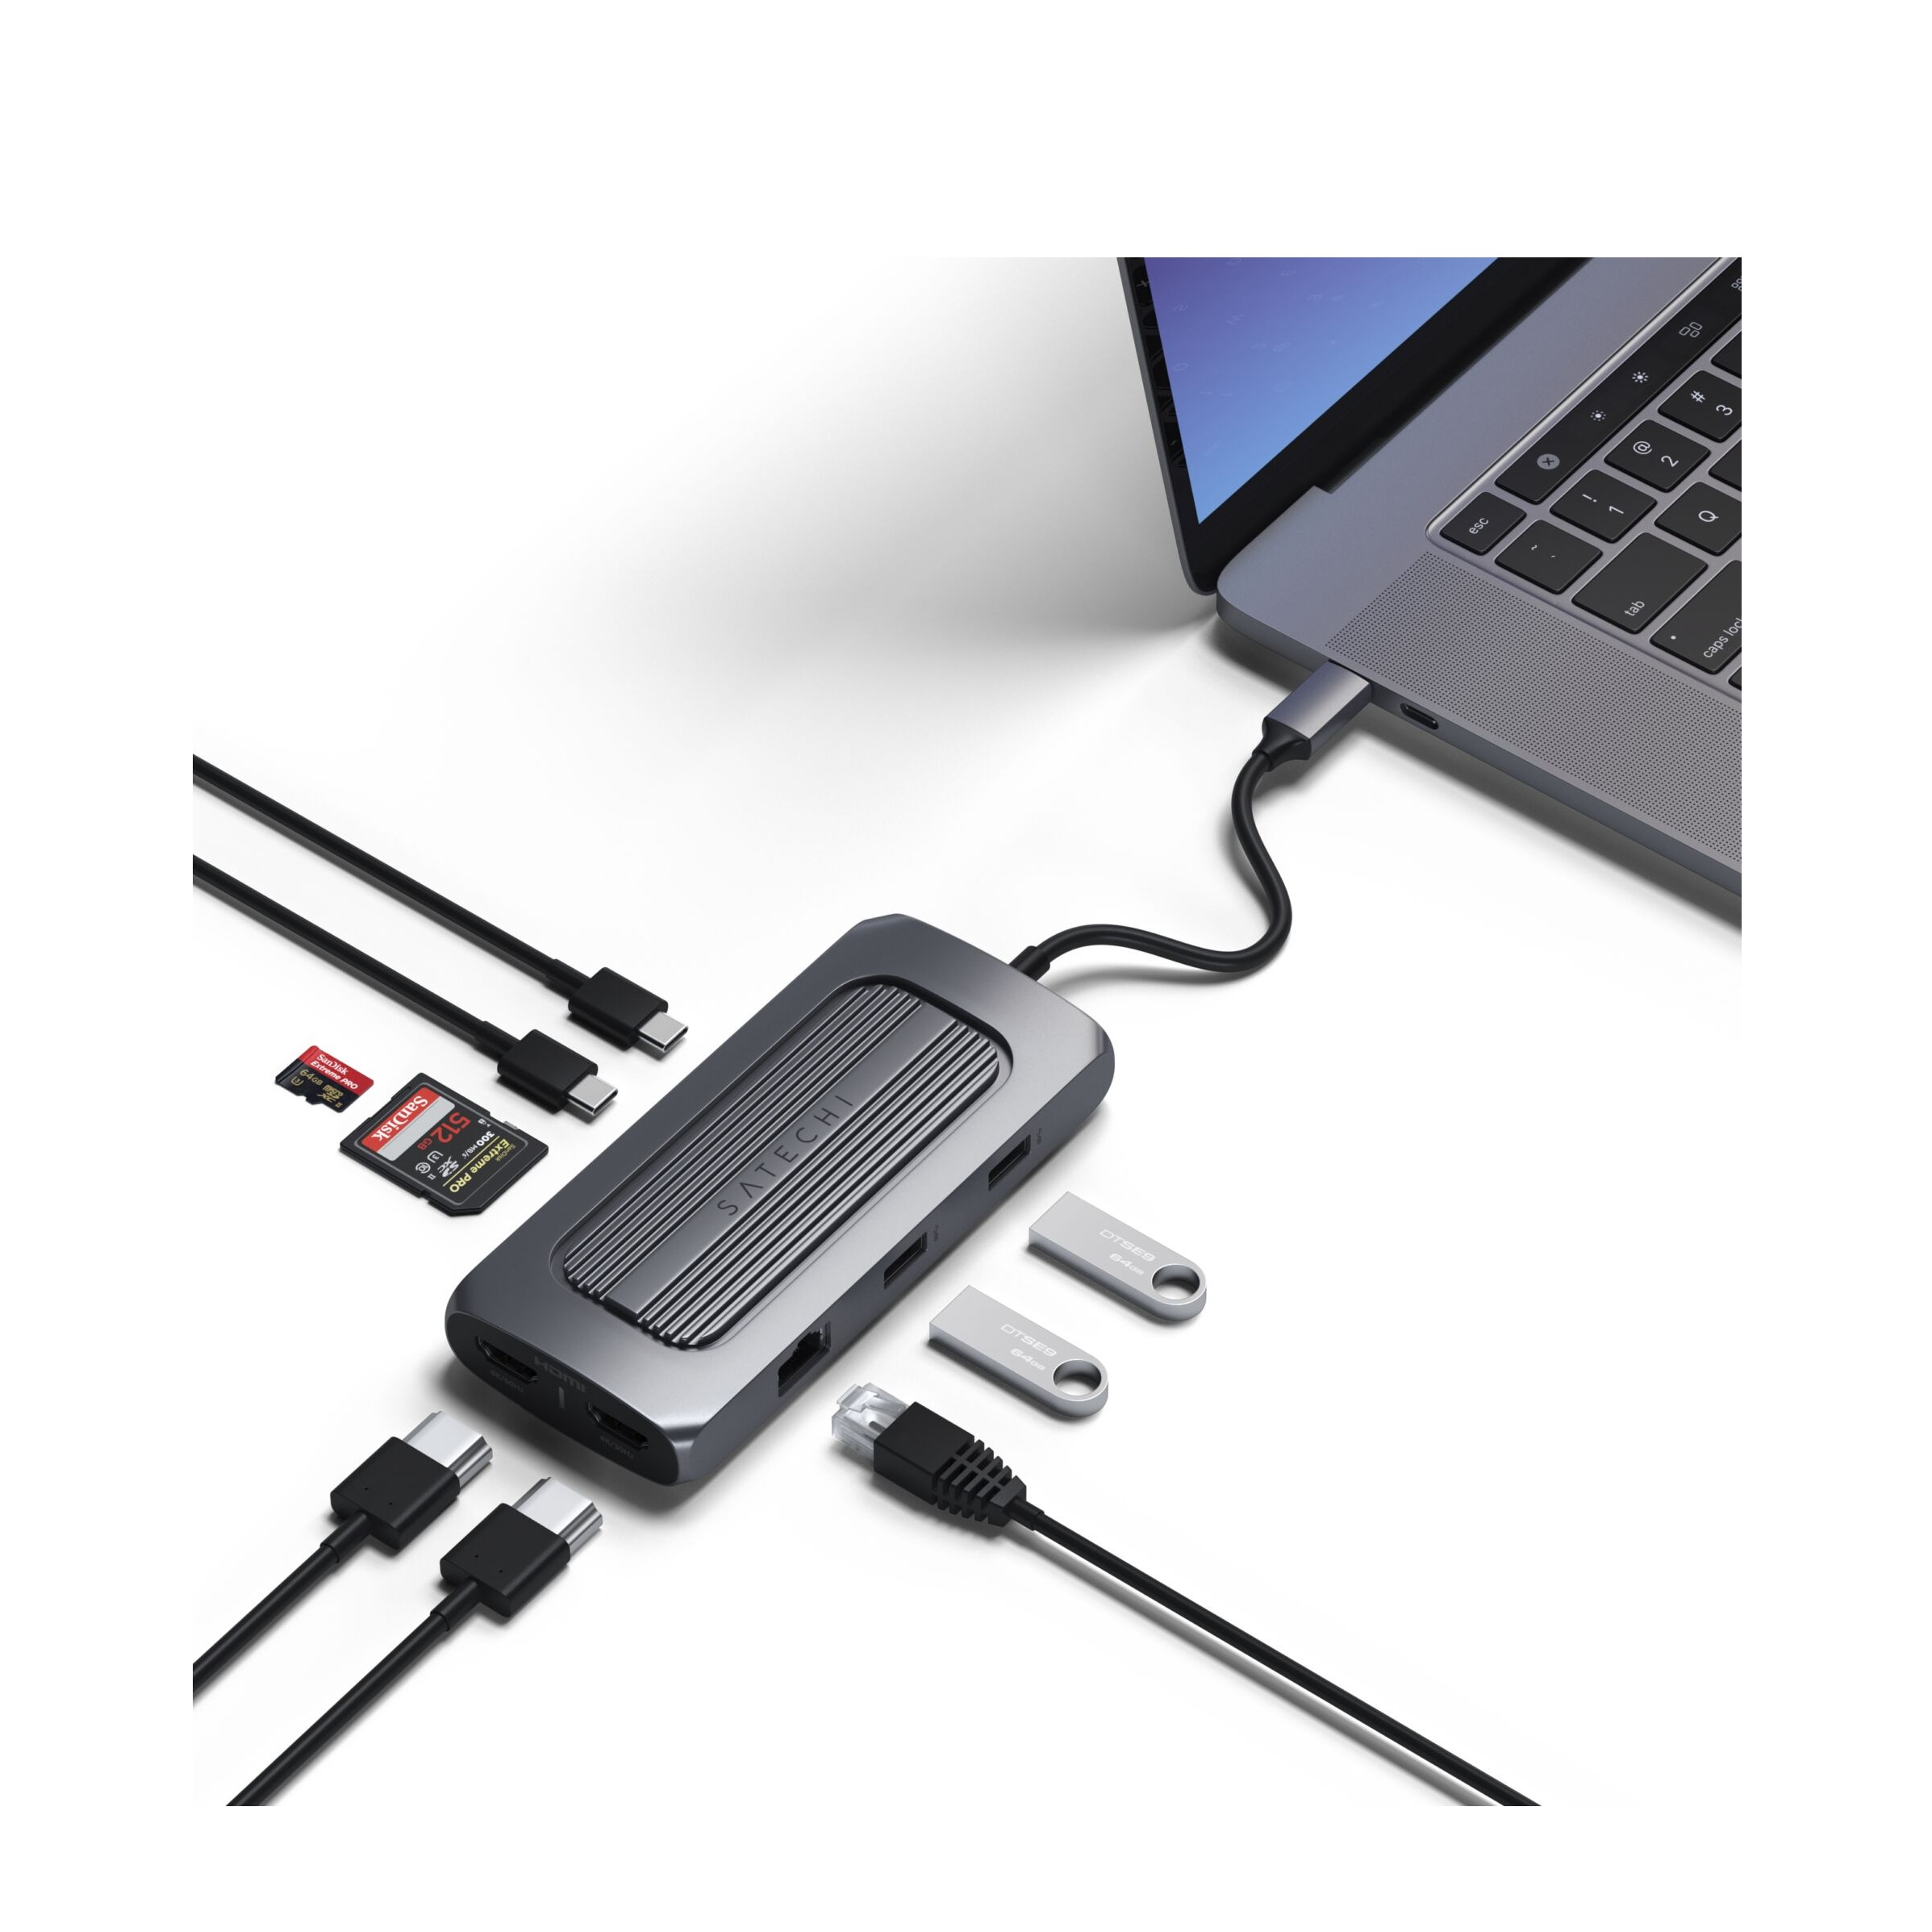 Image of Satechi - (100W) USB C Multiport MX Adapter Hub mit USB C / 2x 4K HDMI / 2x USB 3.0 / MicroSD / LAN / 3.5mm Klinke (ST-UCMXAM) - Space Grau bei Apfelkiste.ch